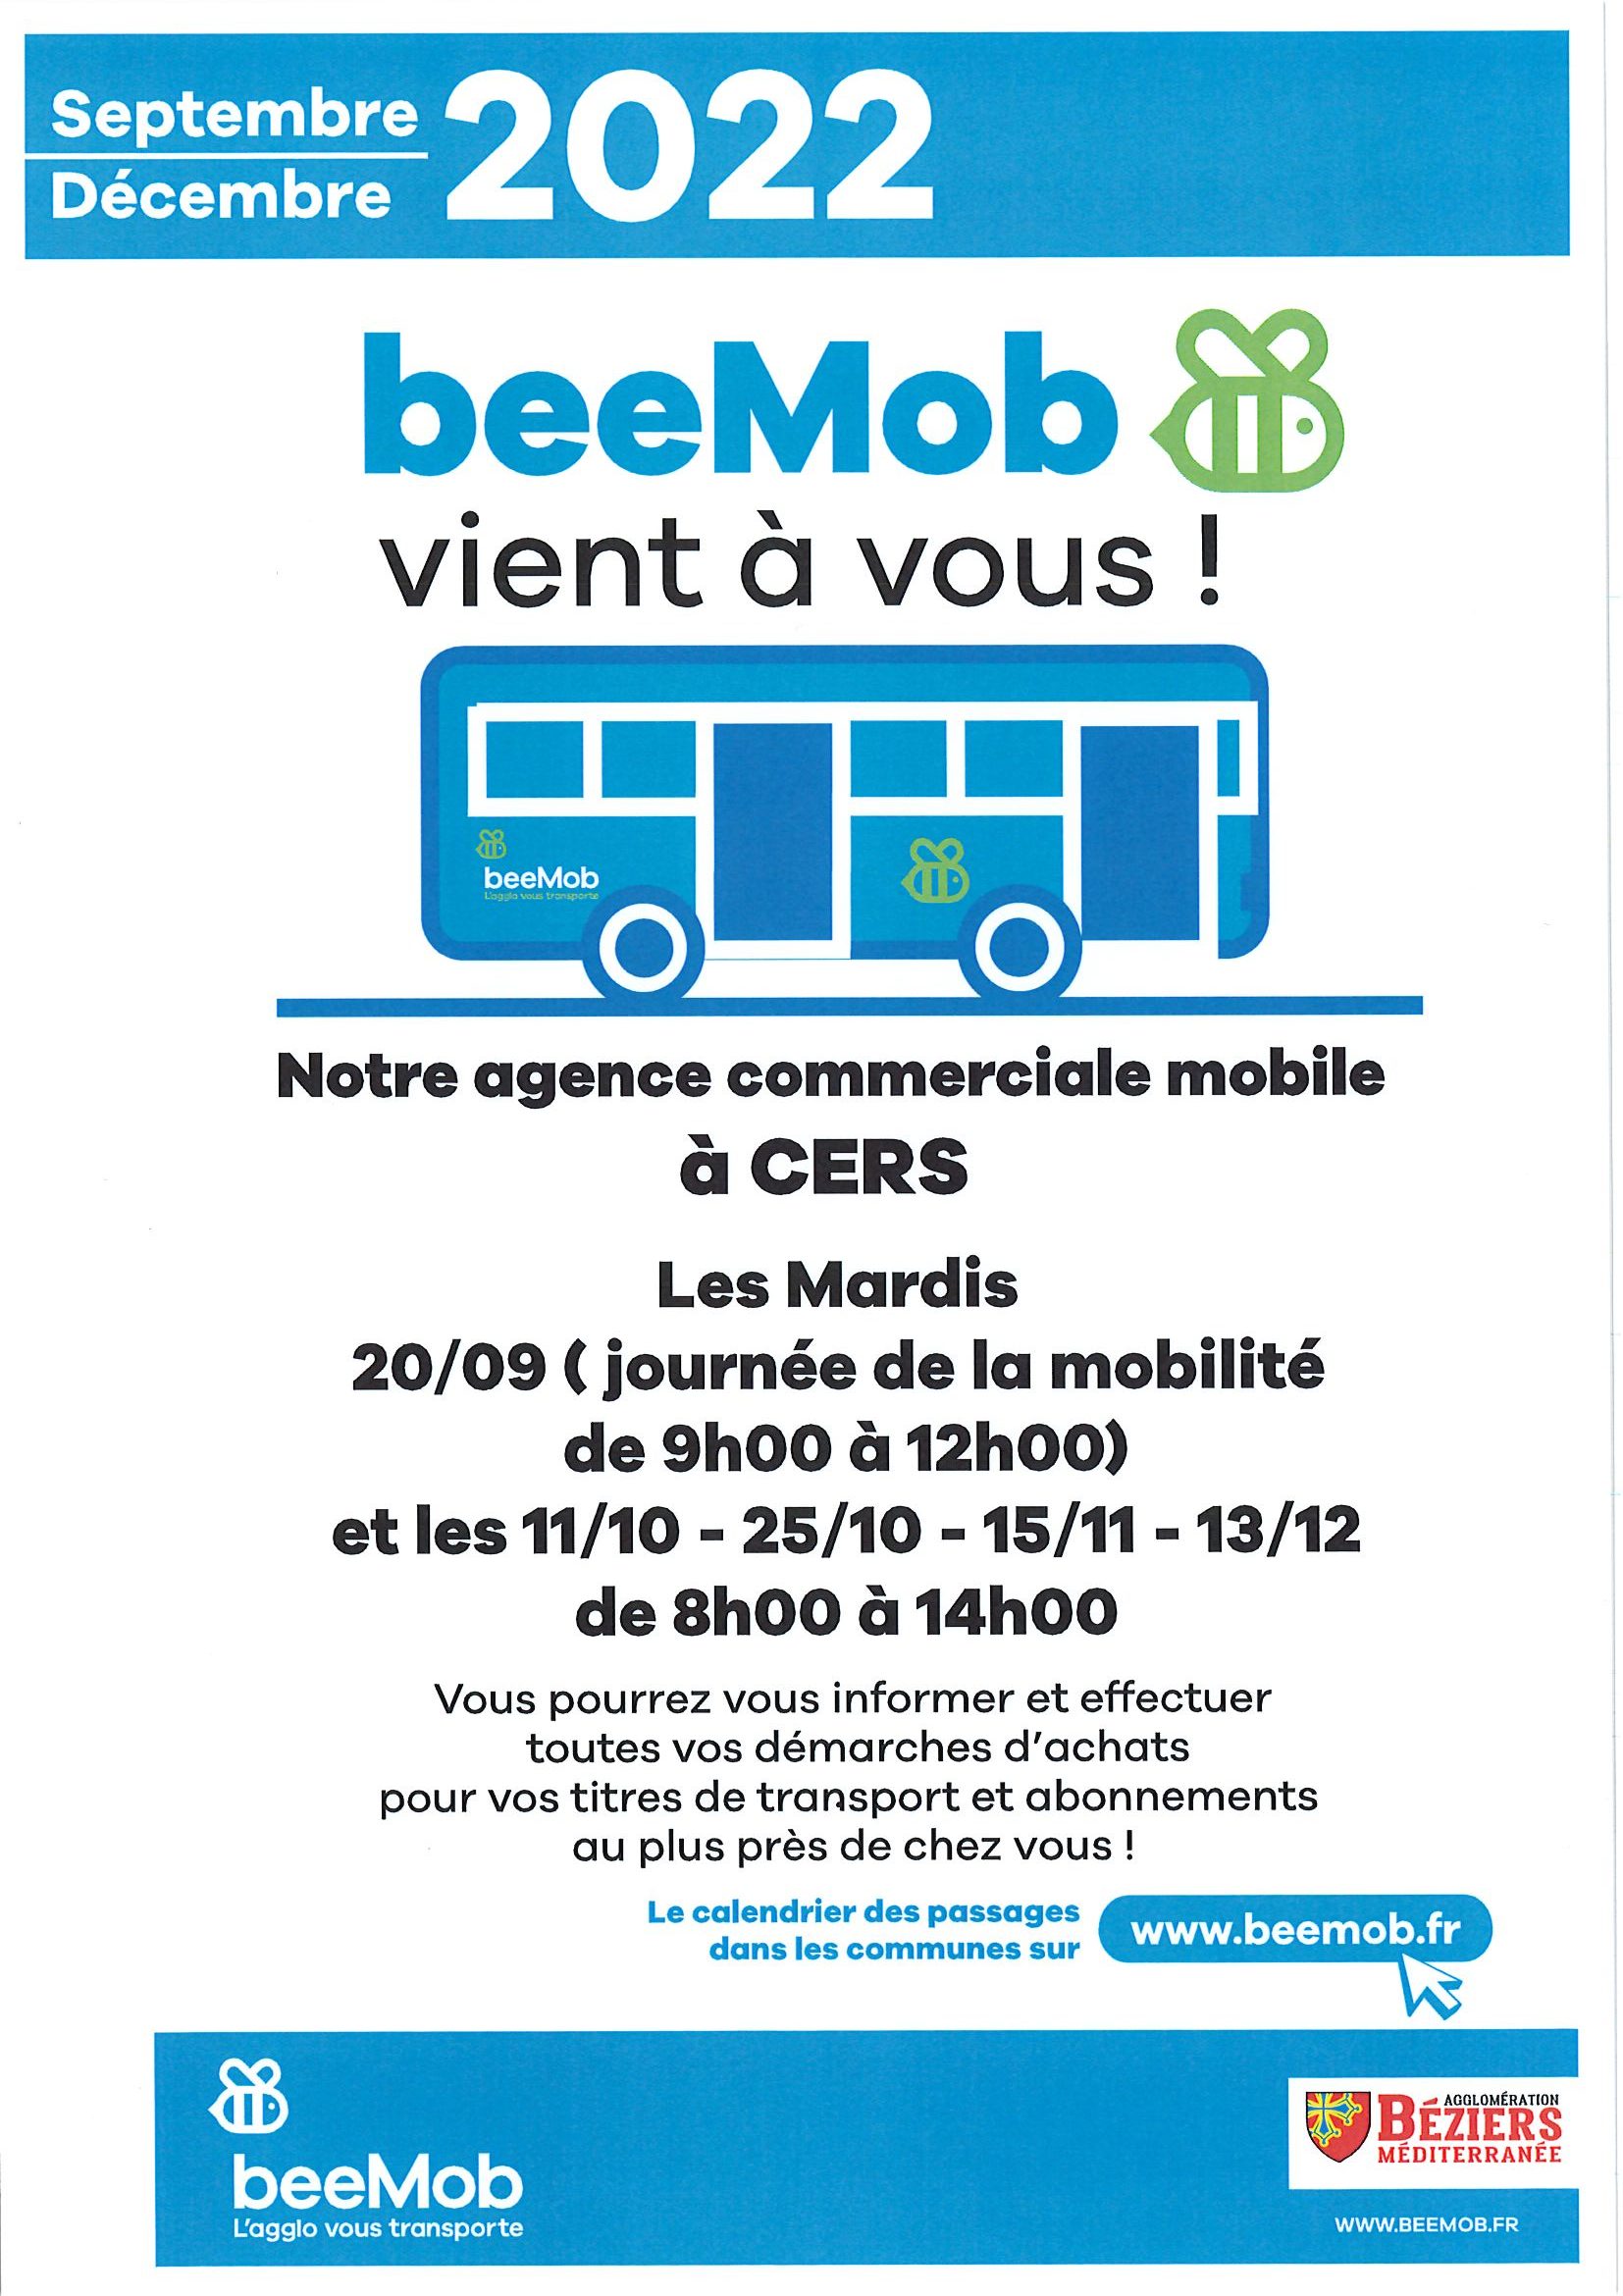 You are currently viewing beeMob : prochains rendez-vous à Cers sous les Halles